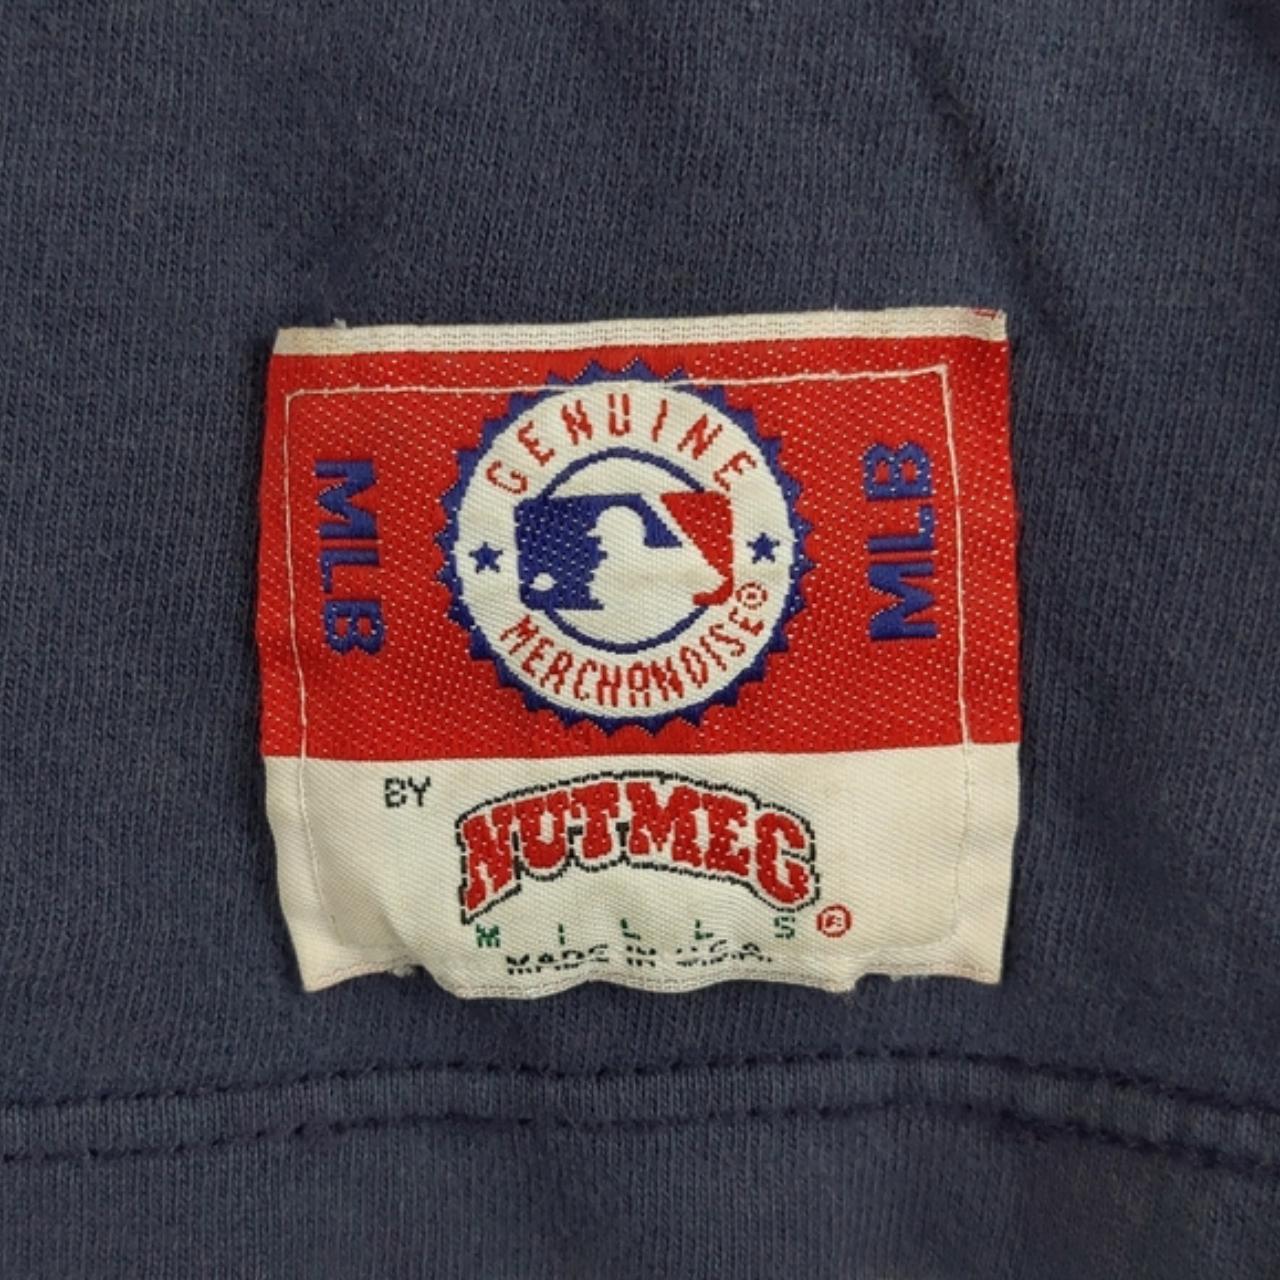 Vintage Majestic Seattle Mariners Stitched Blank - Depop